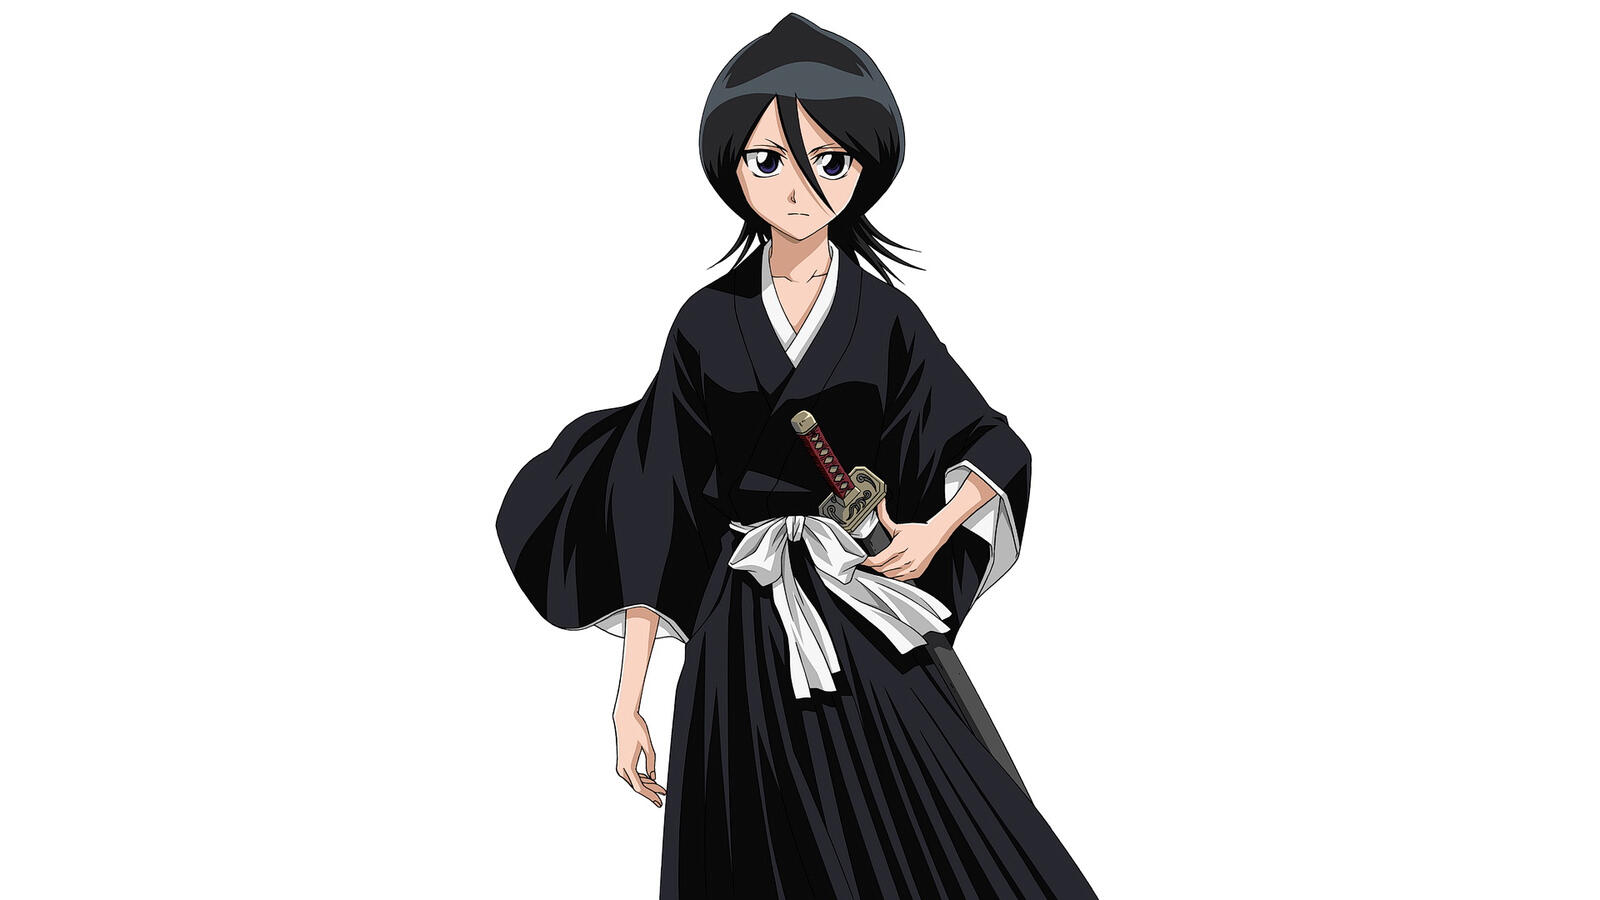 Free photo Anime hero Rukia Kuchiki stands on a white background with a sword